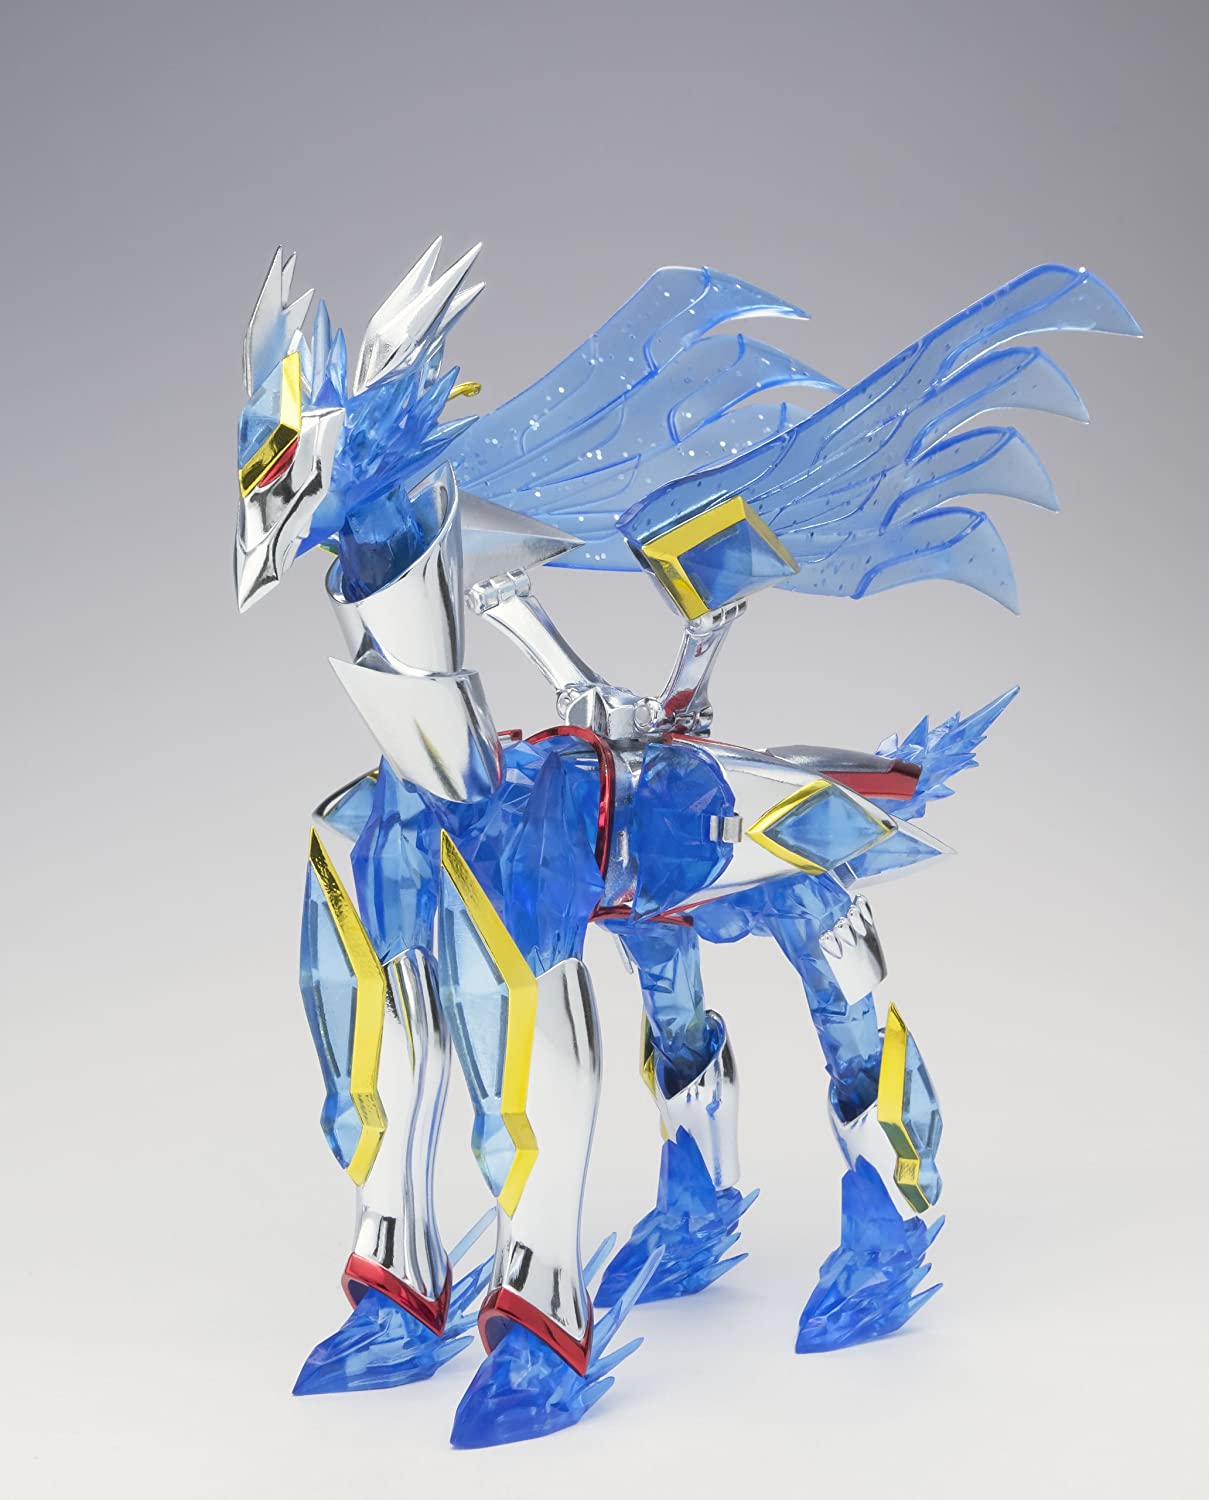 Saint Cloth Myth - Saint Seiya Omega: Pegasus Kouga | animota